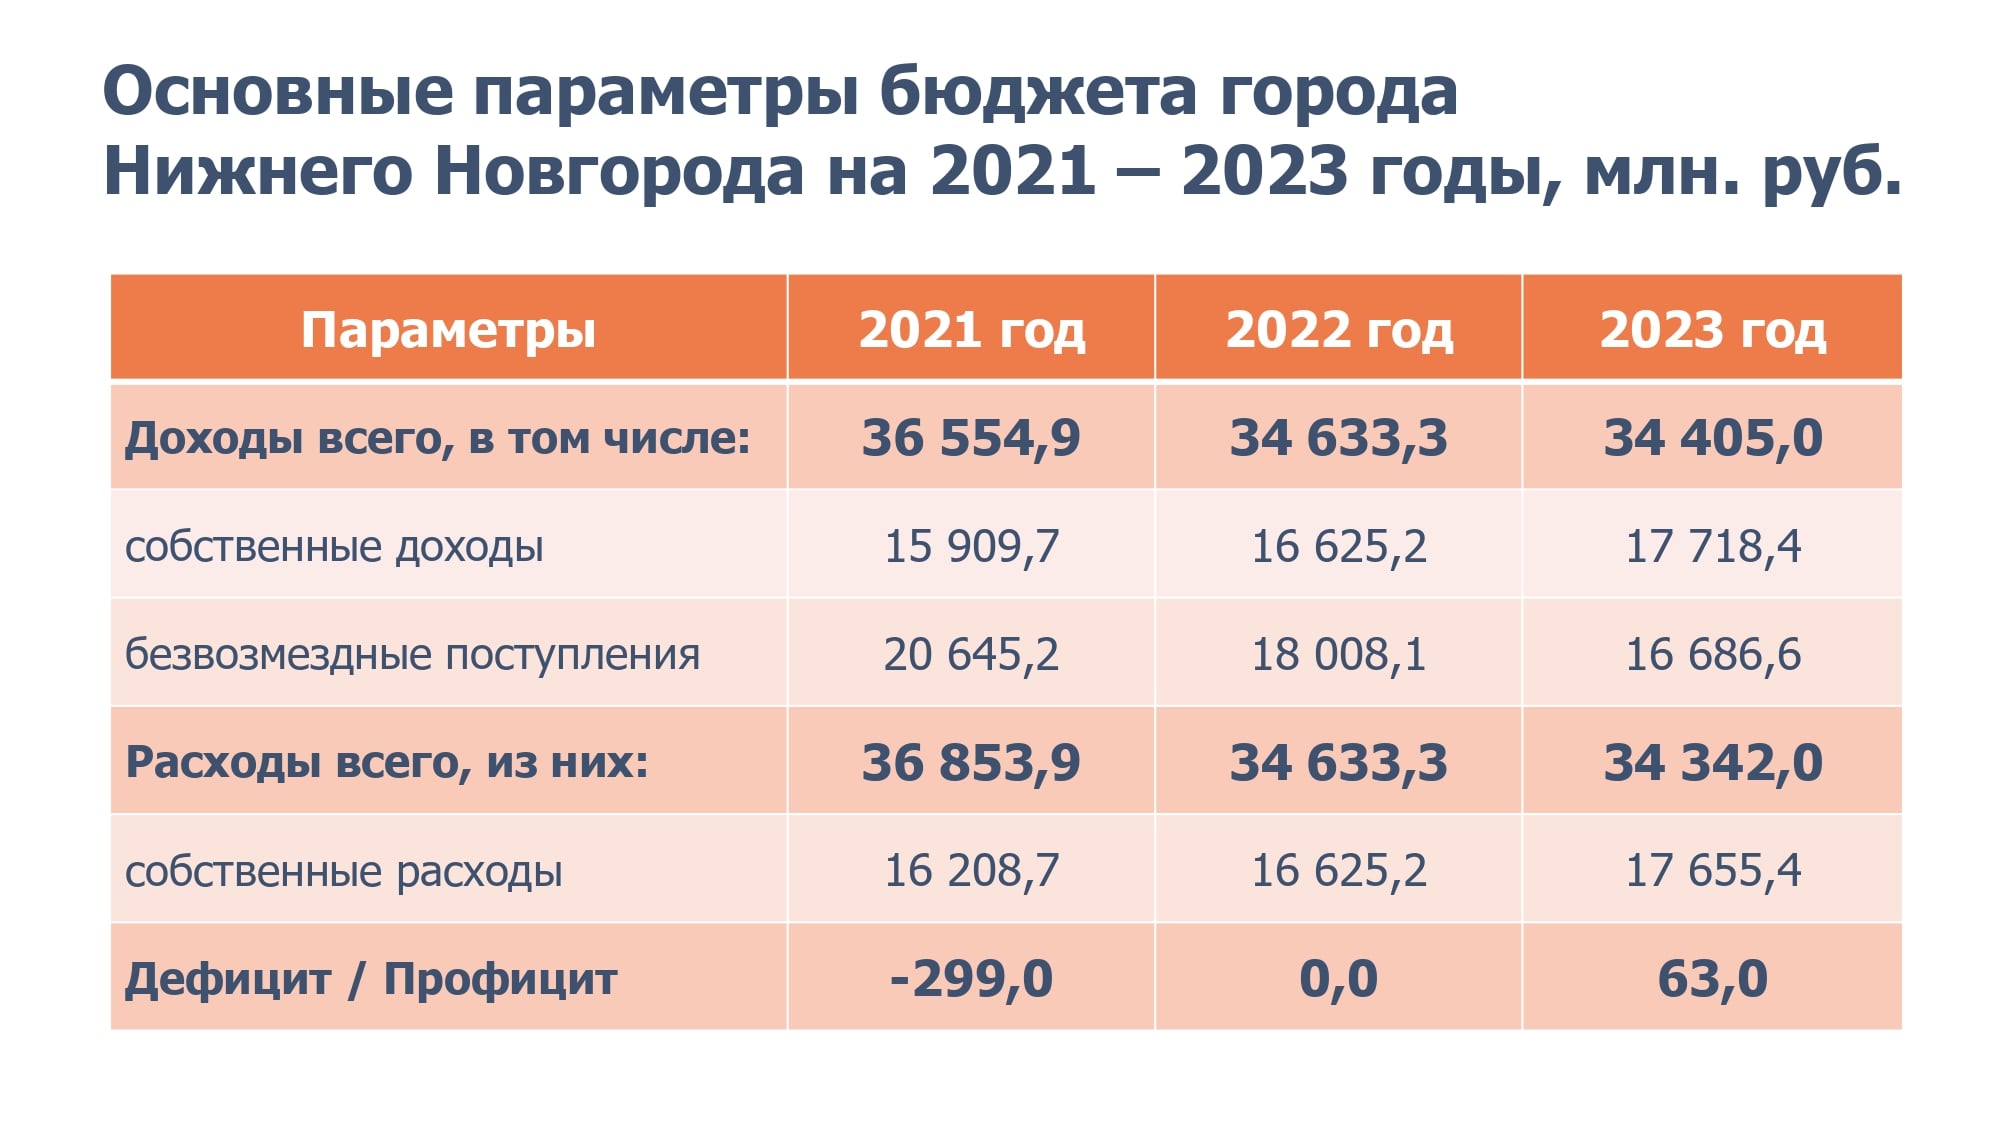 Penetration of mci 2023